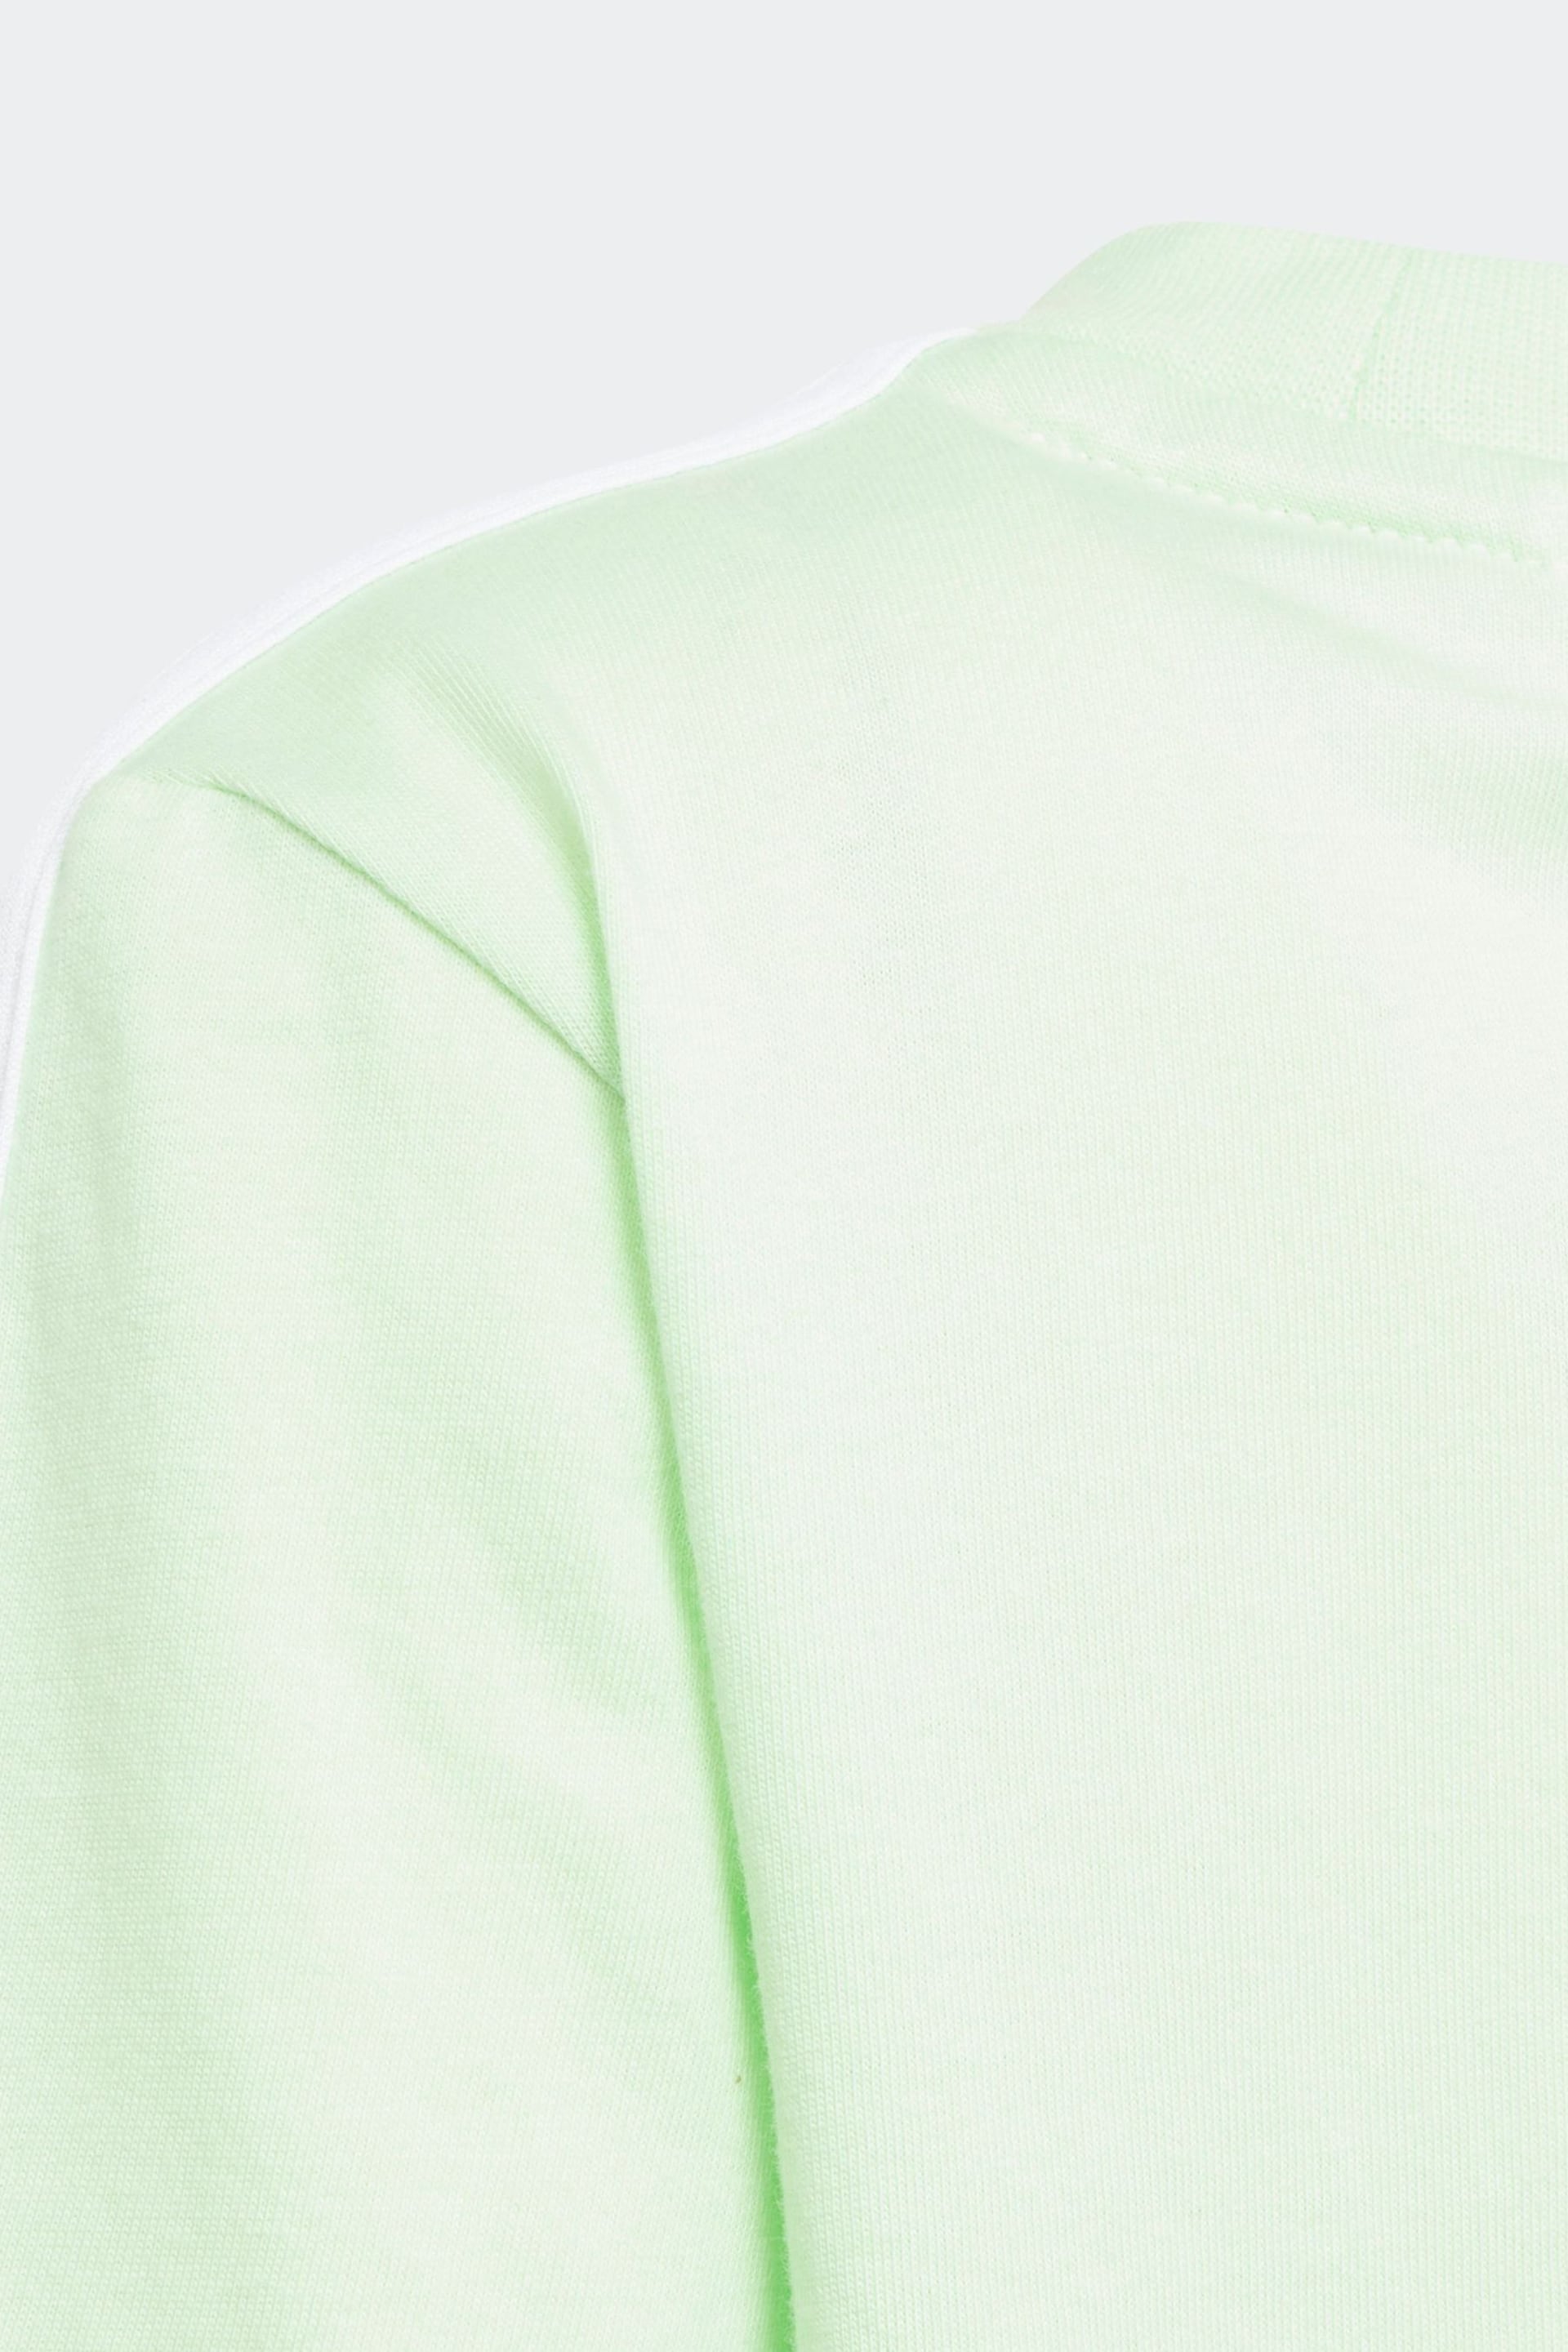 adidas Lemon Green Sportswear Essentials 3-Stripes Cotton T-Shirt - Image 4 of 5